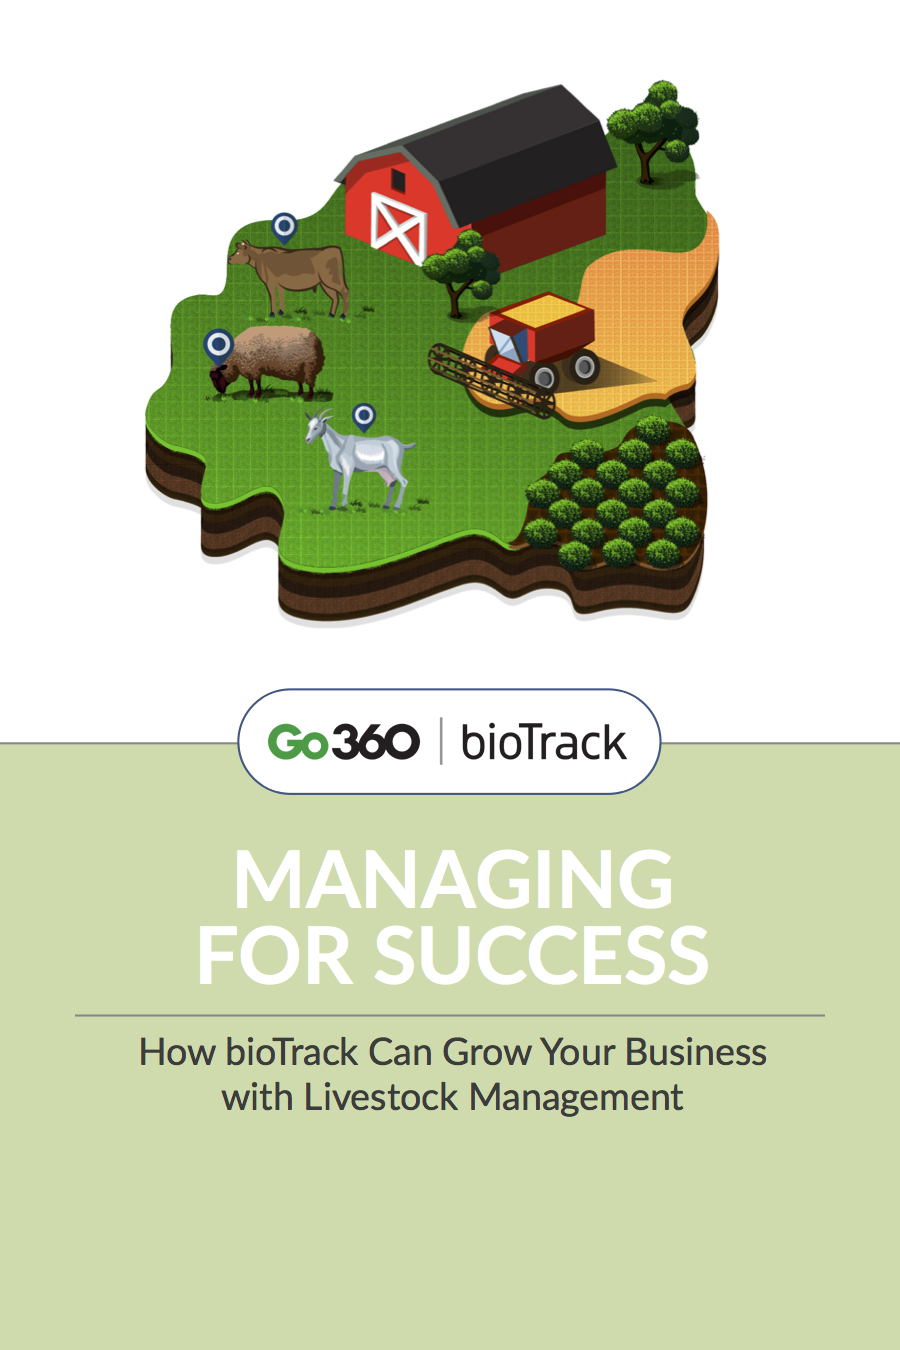 bioTrack Livestock Management